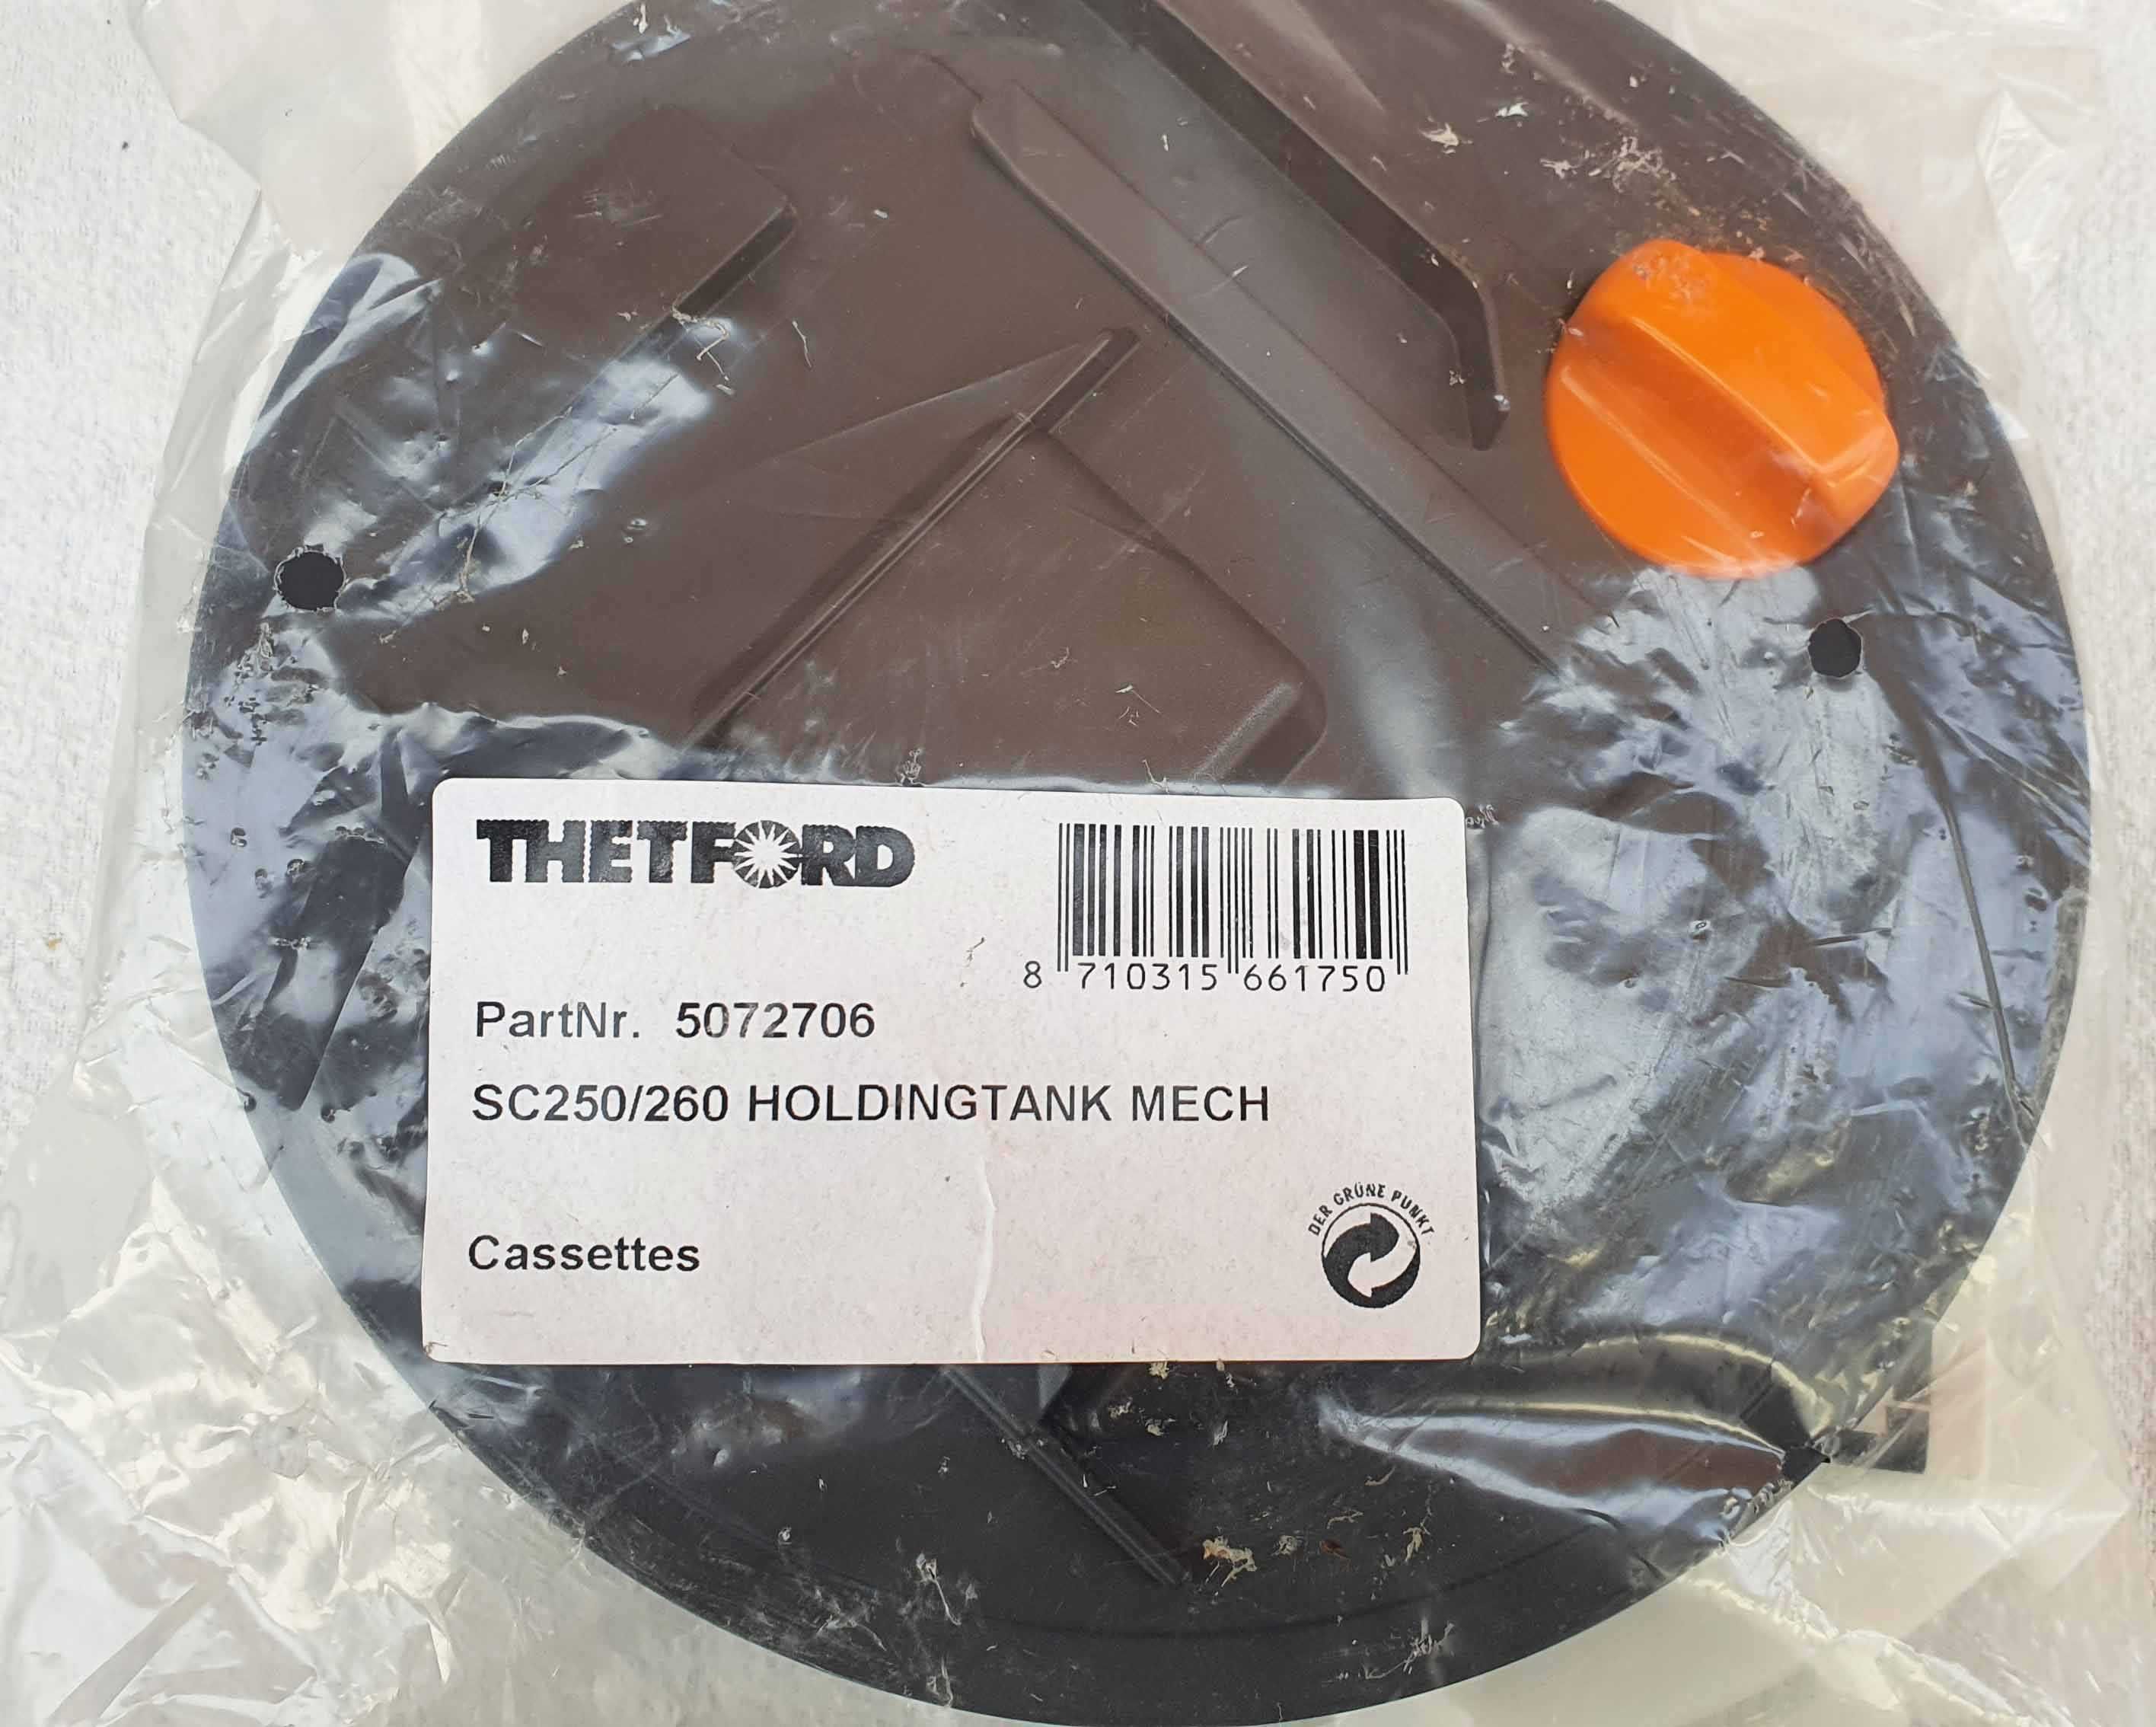 Thetford SC250 /260 rezervor de fecale si capac mecanism rezervor, noi